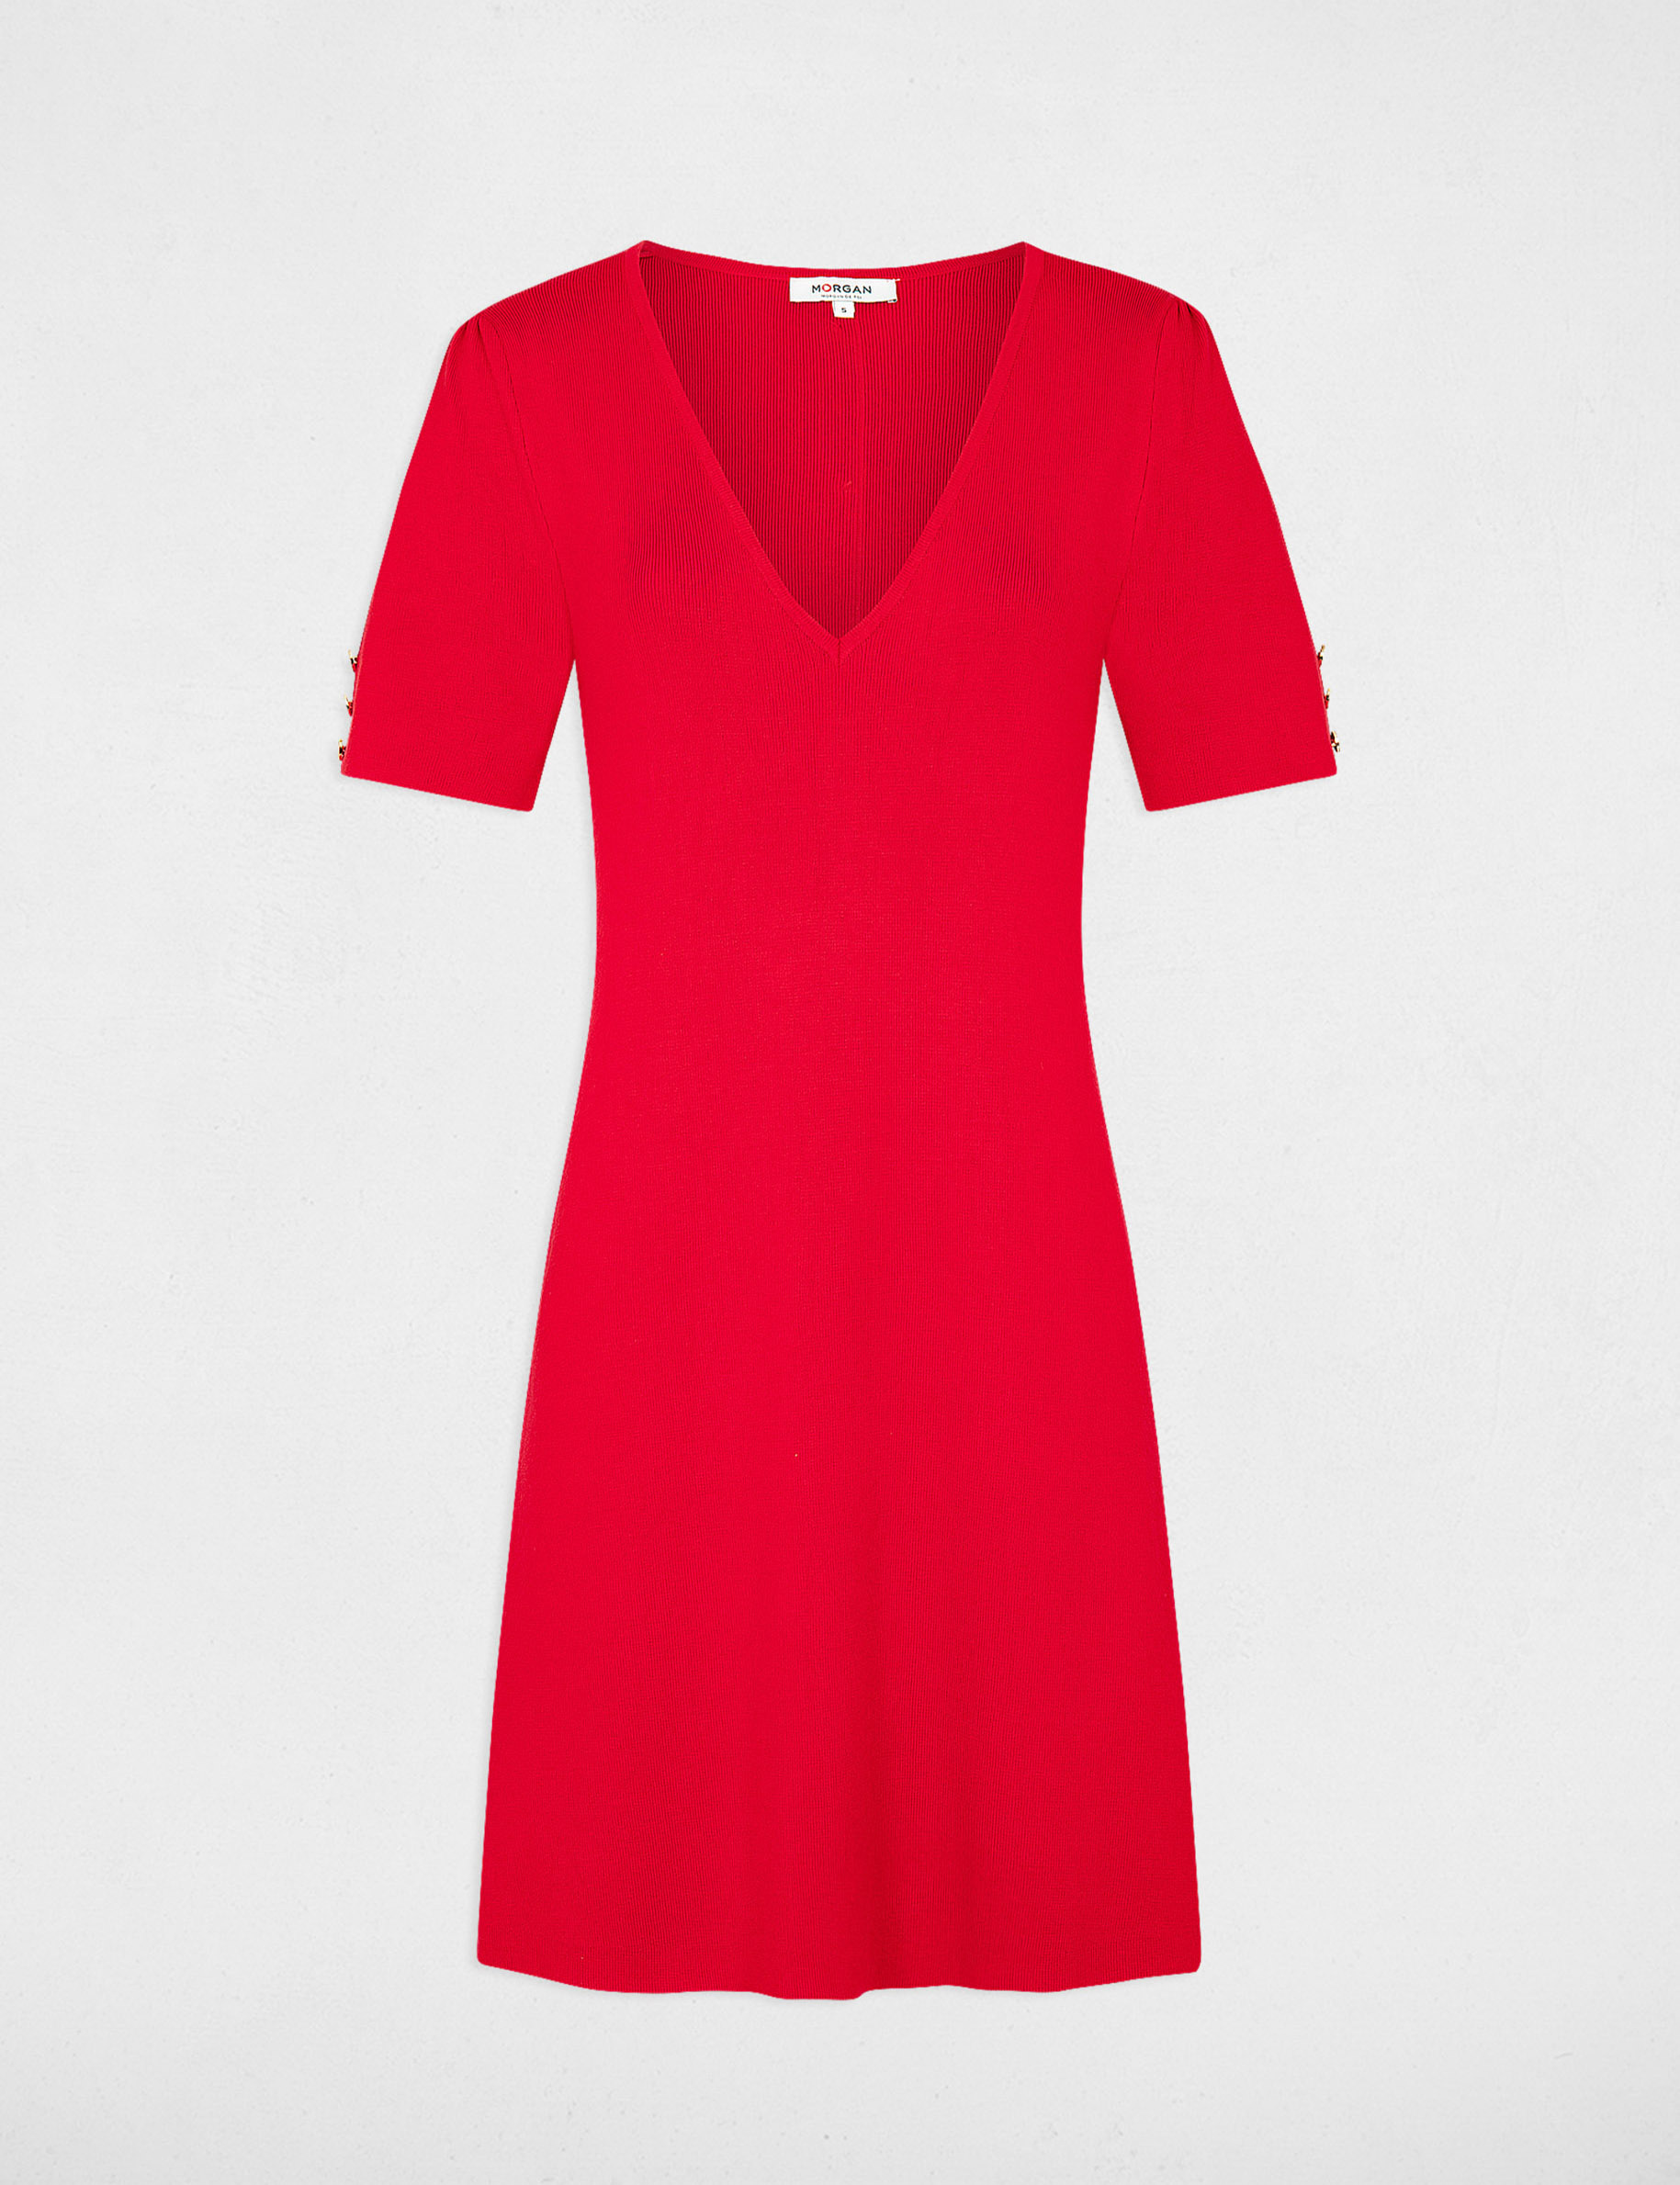 Gebreide, rechte, knielange jurk rood vrouw